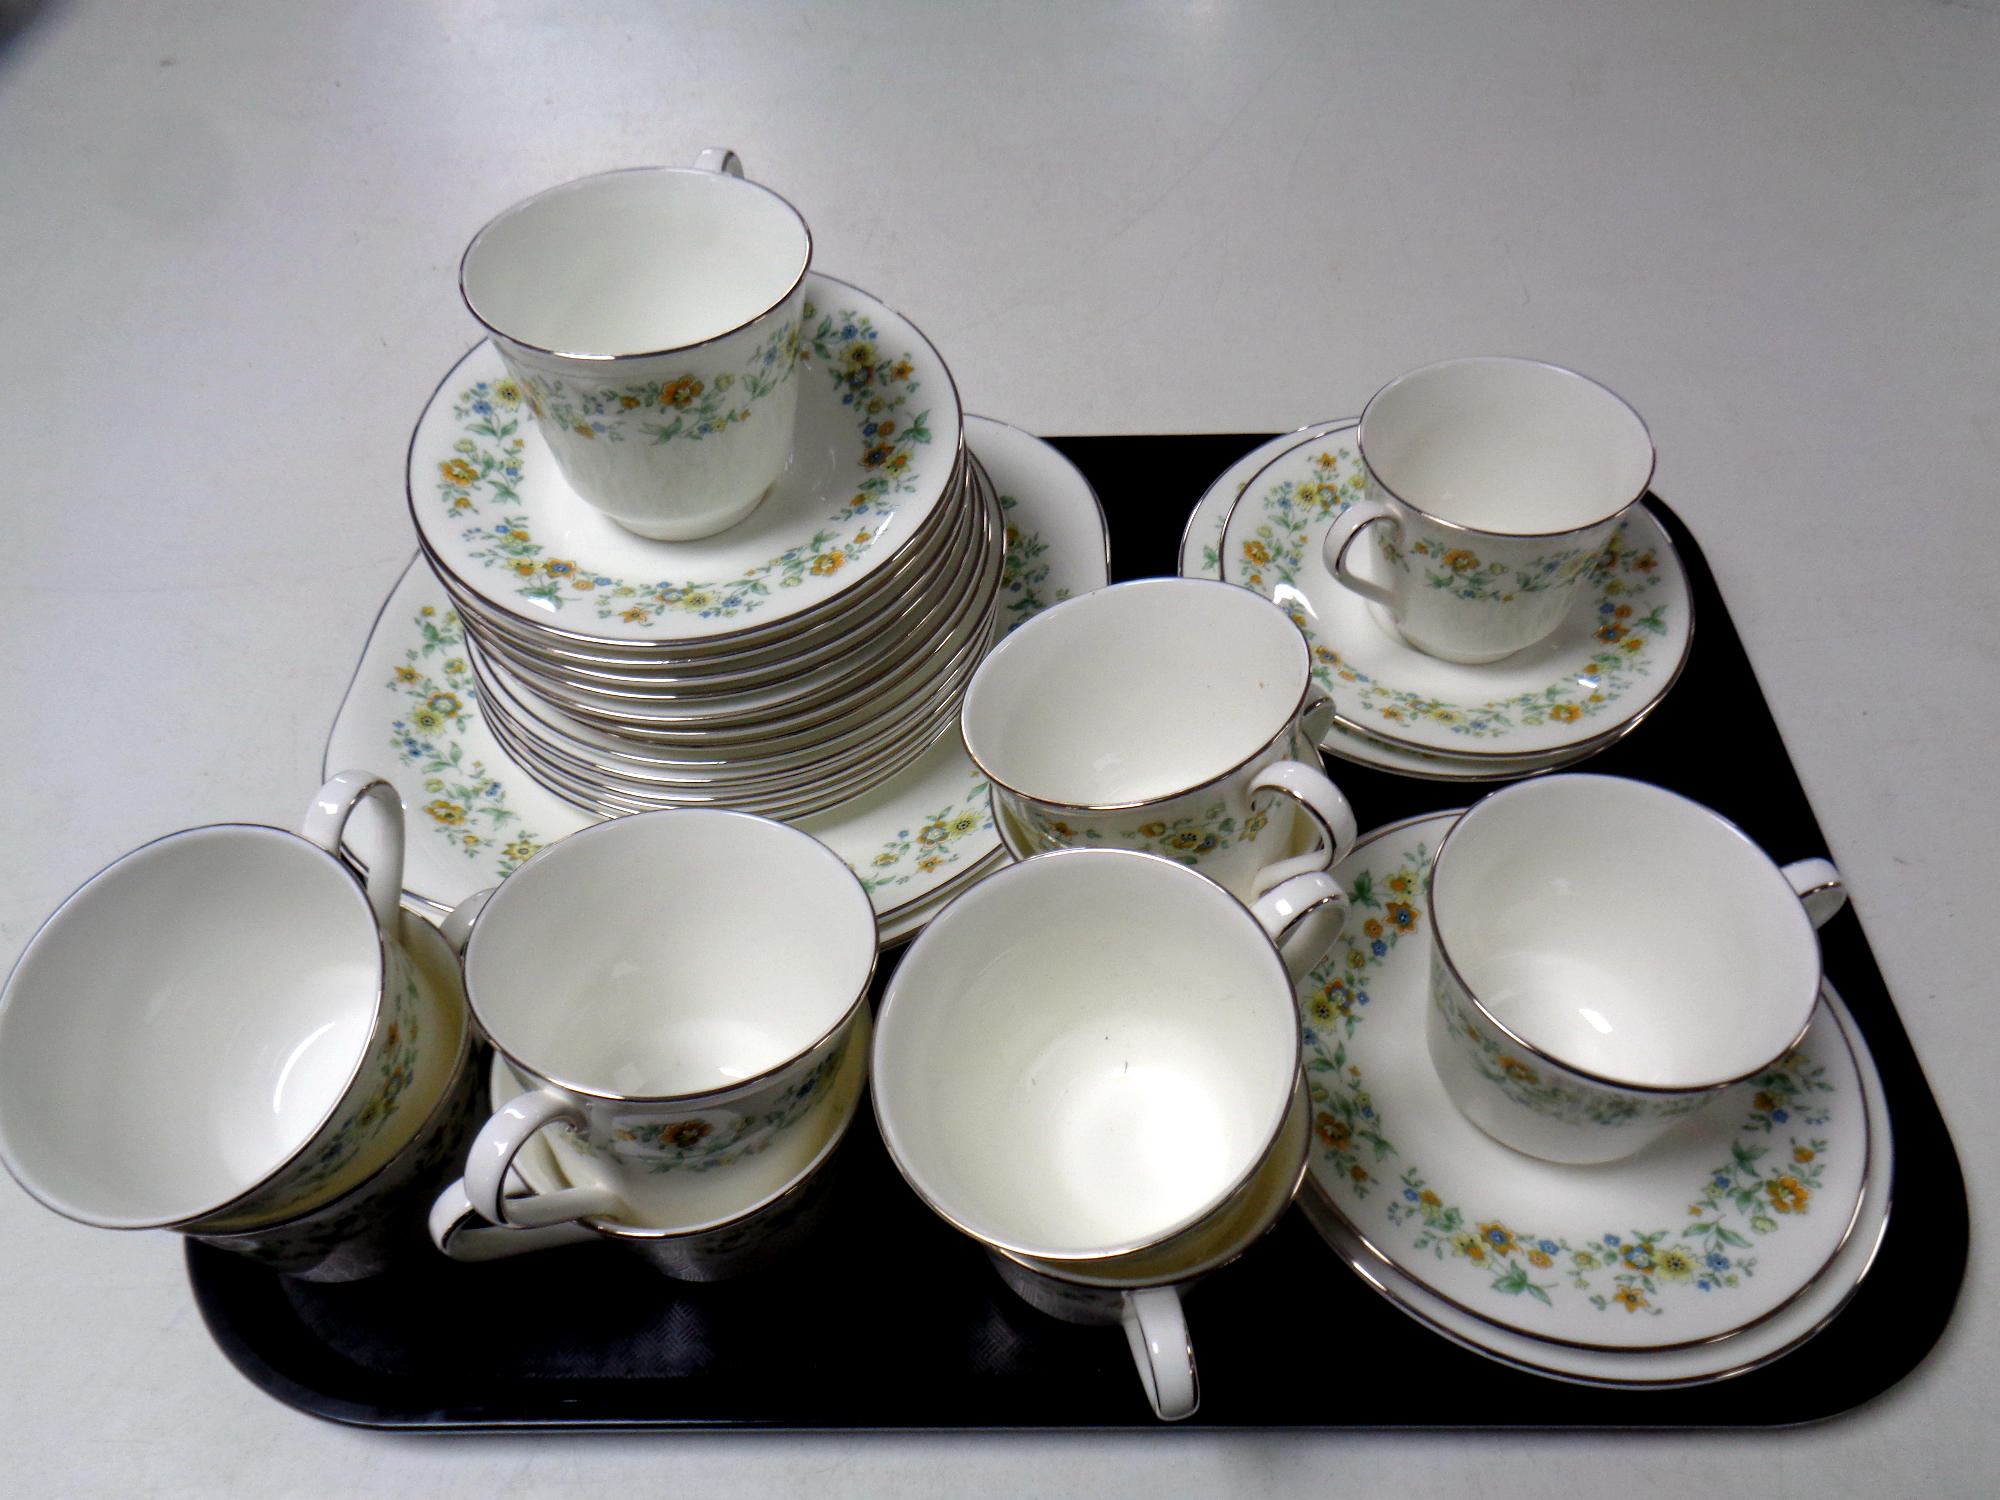 A thirty-one piece Royal Doulton Ainsdale bone china tea service